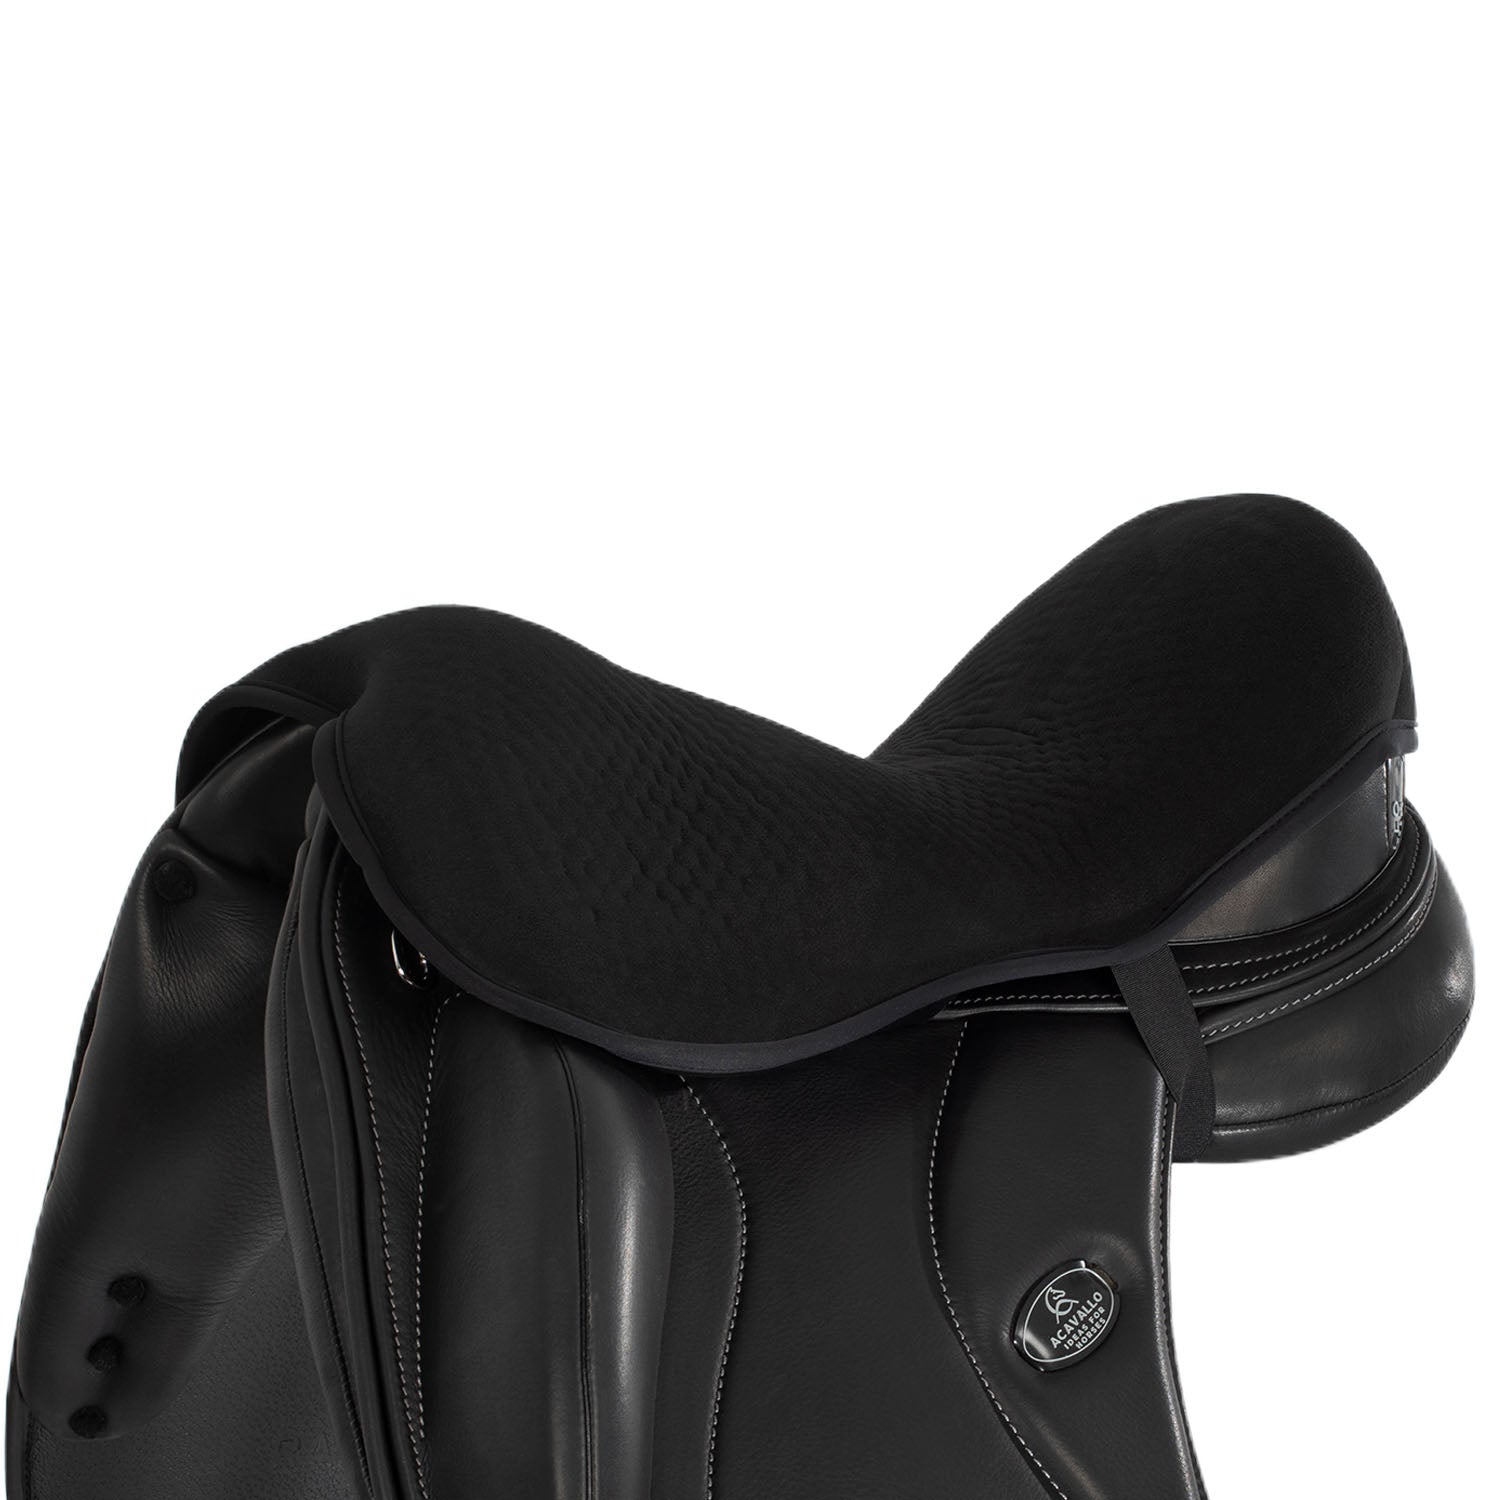 Dressage saddle gel seat saver